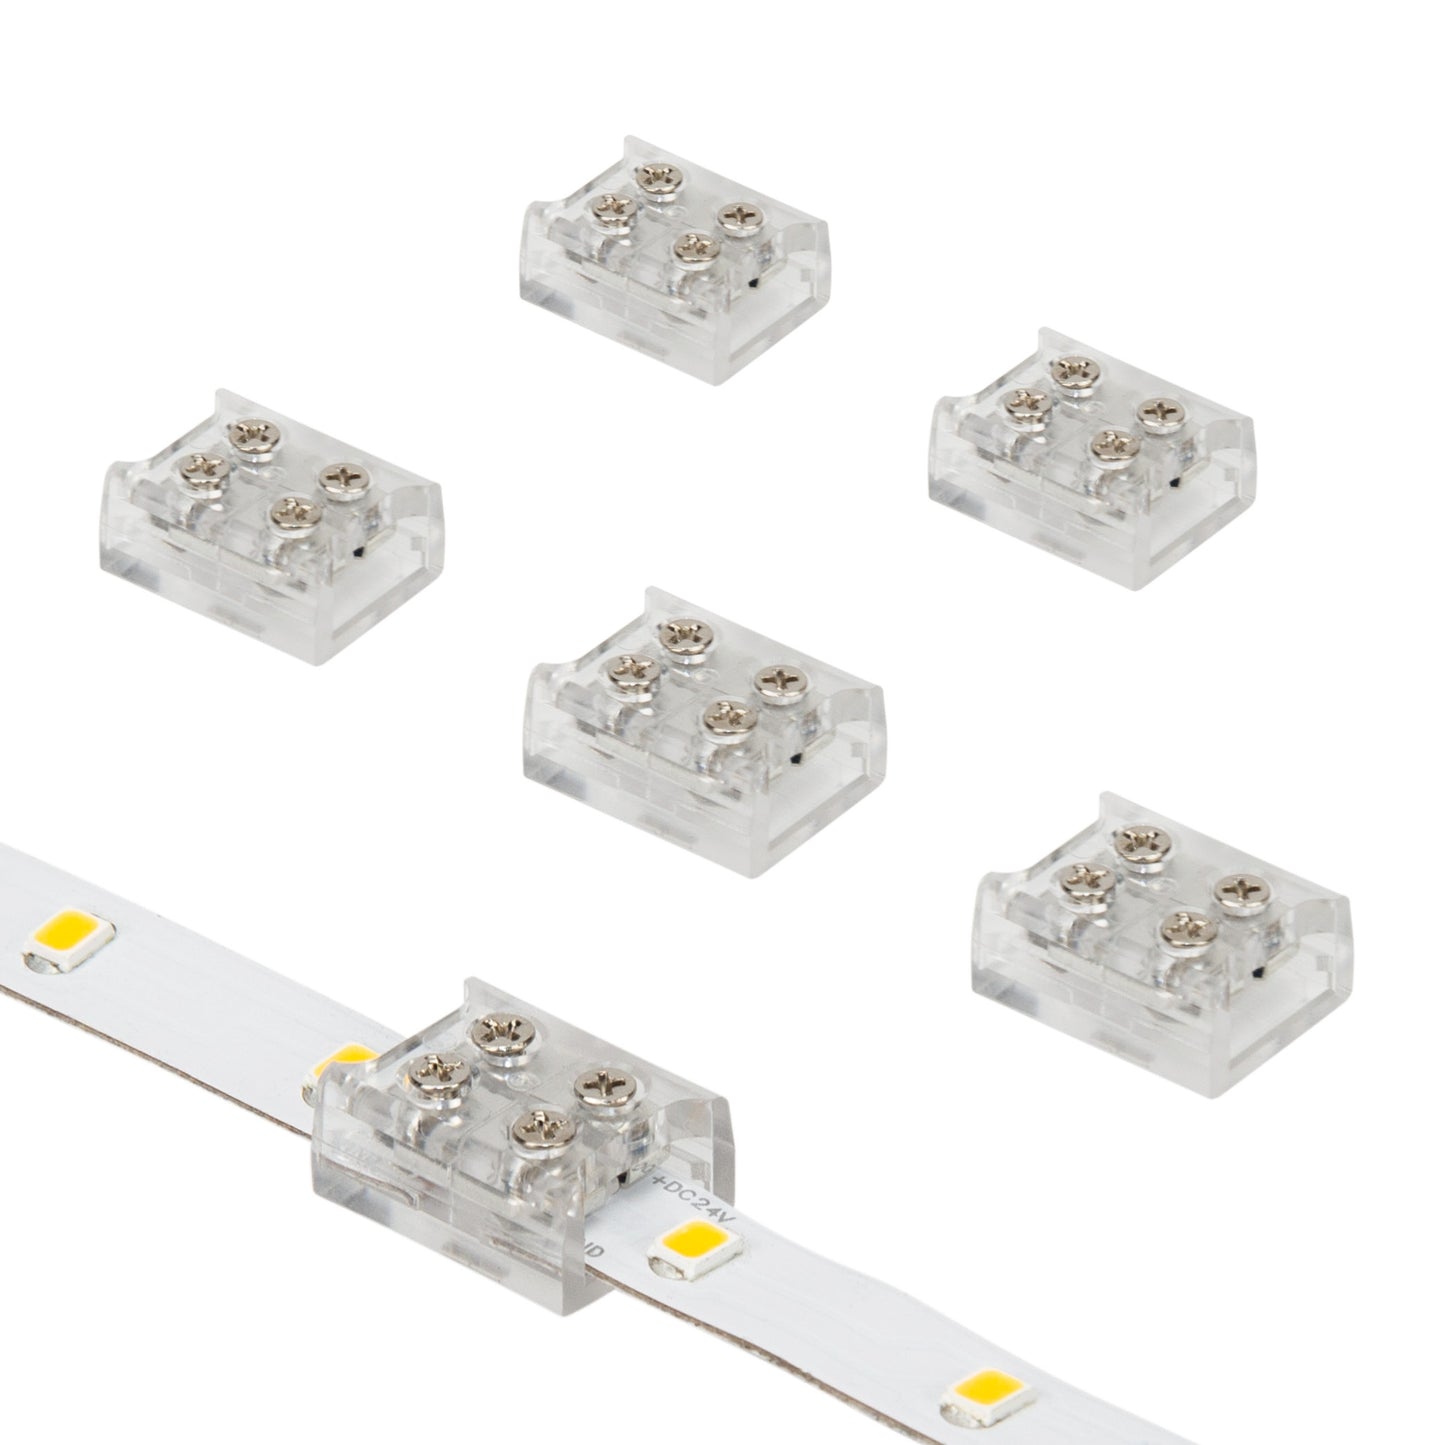 2 Pin LED Strip Light Screw Splice Connector